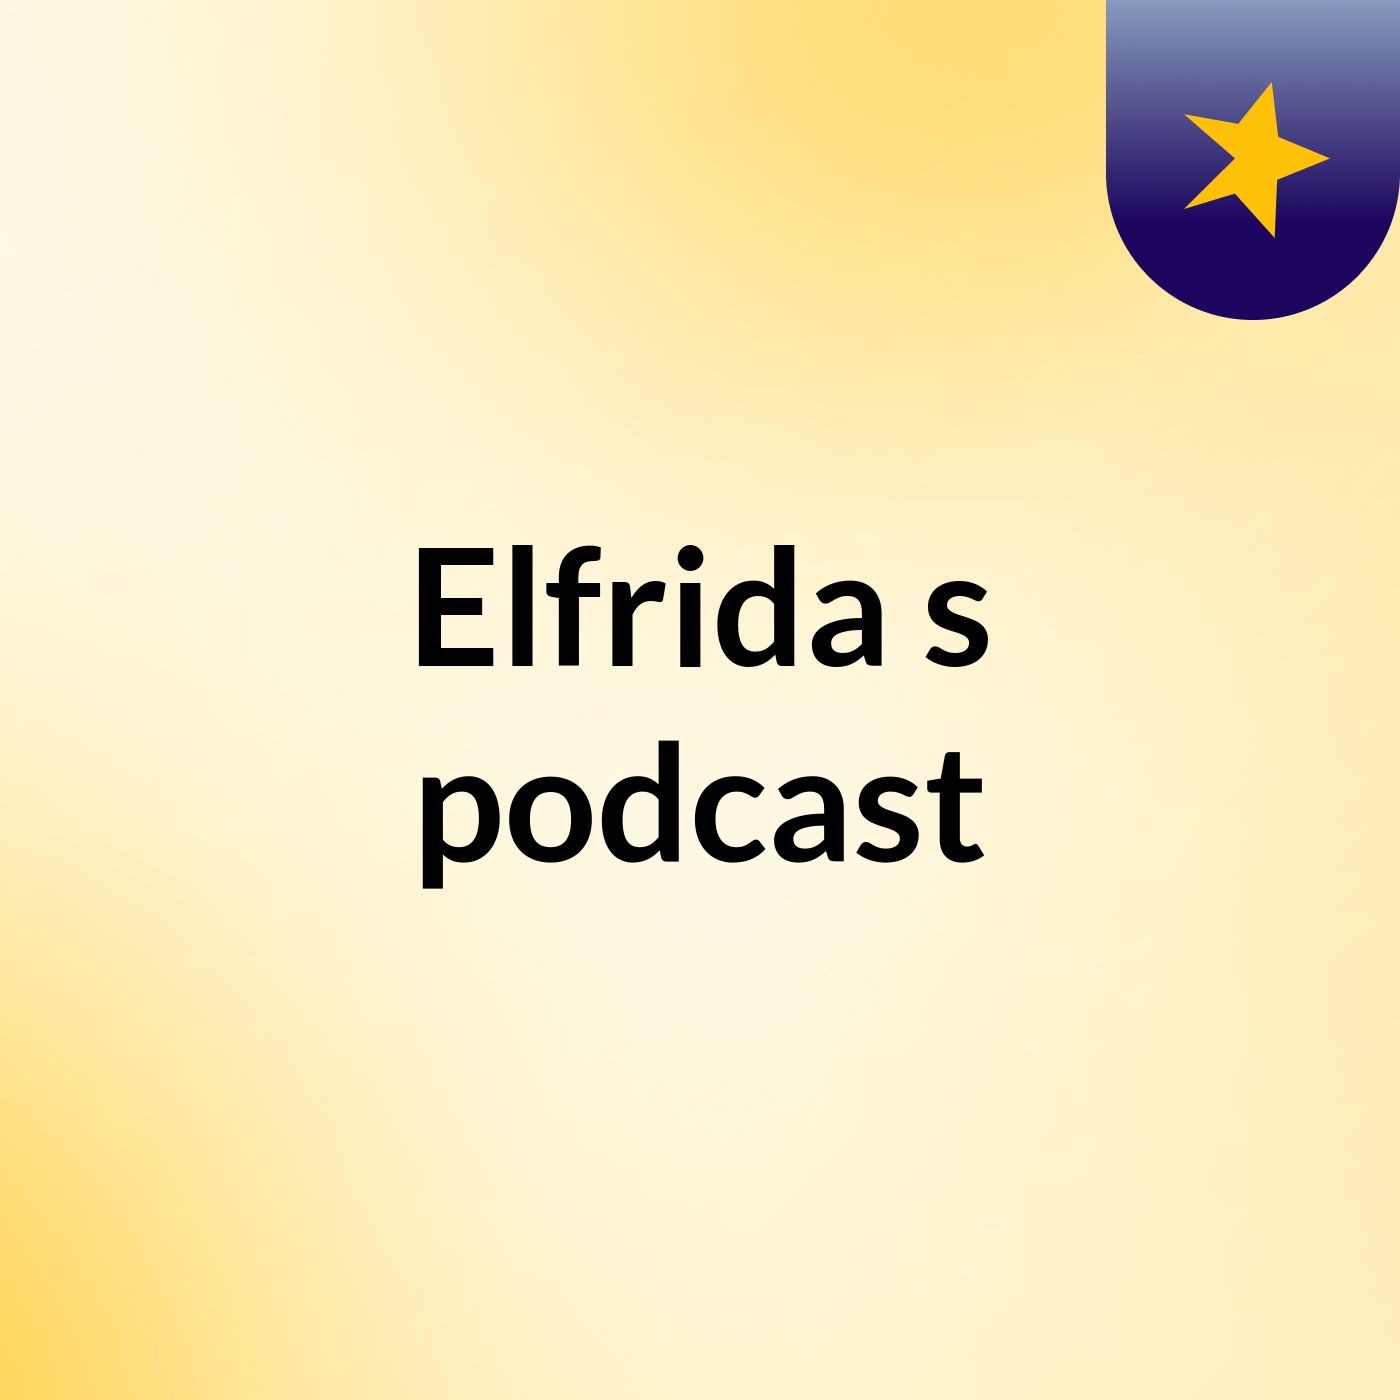 Elfrida's podcast